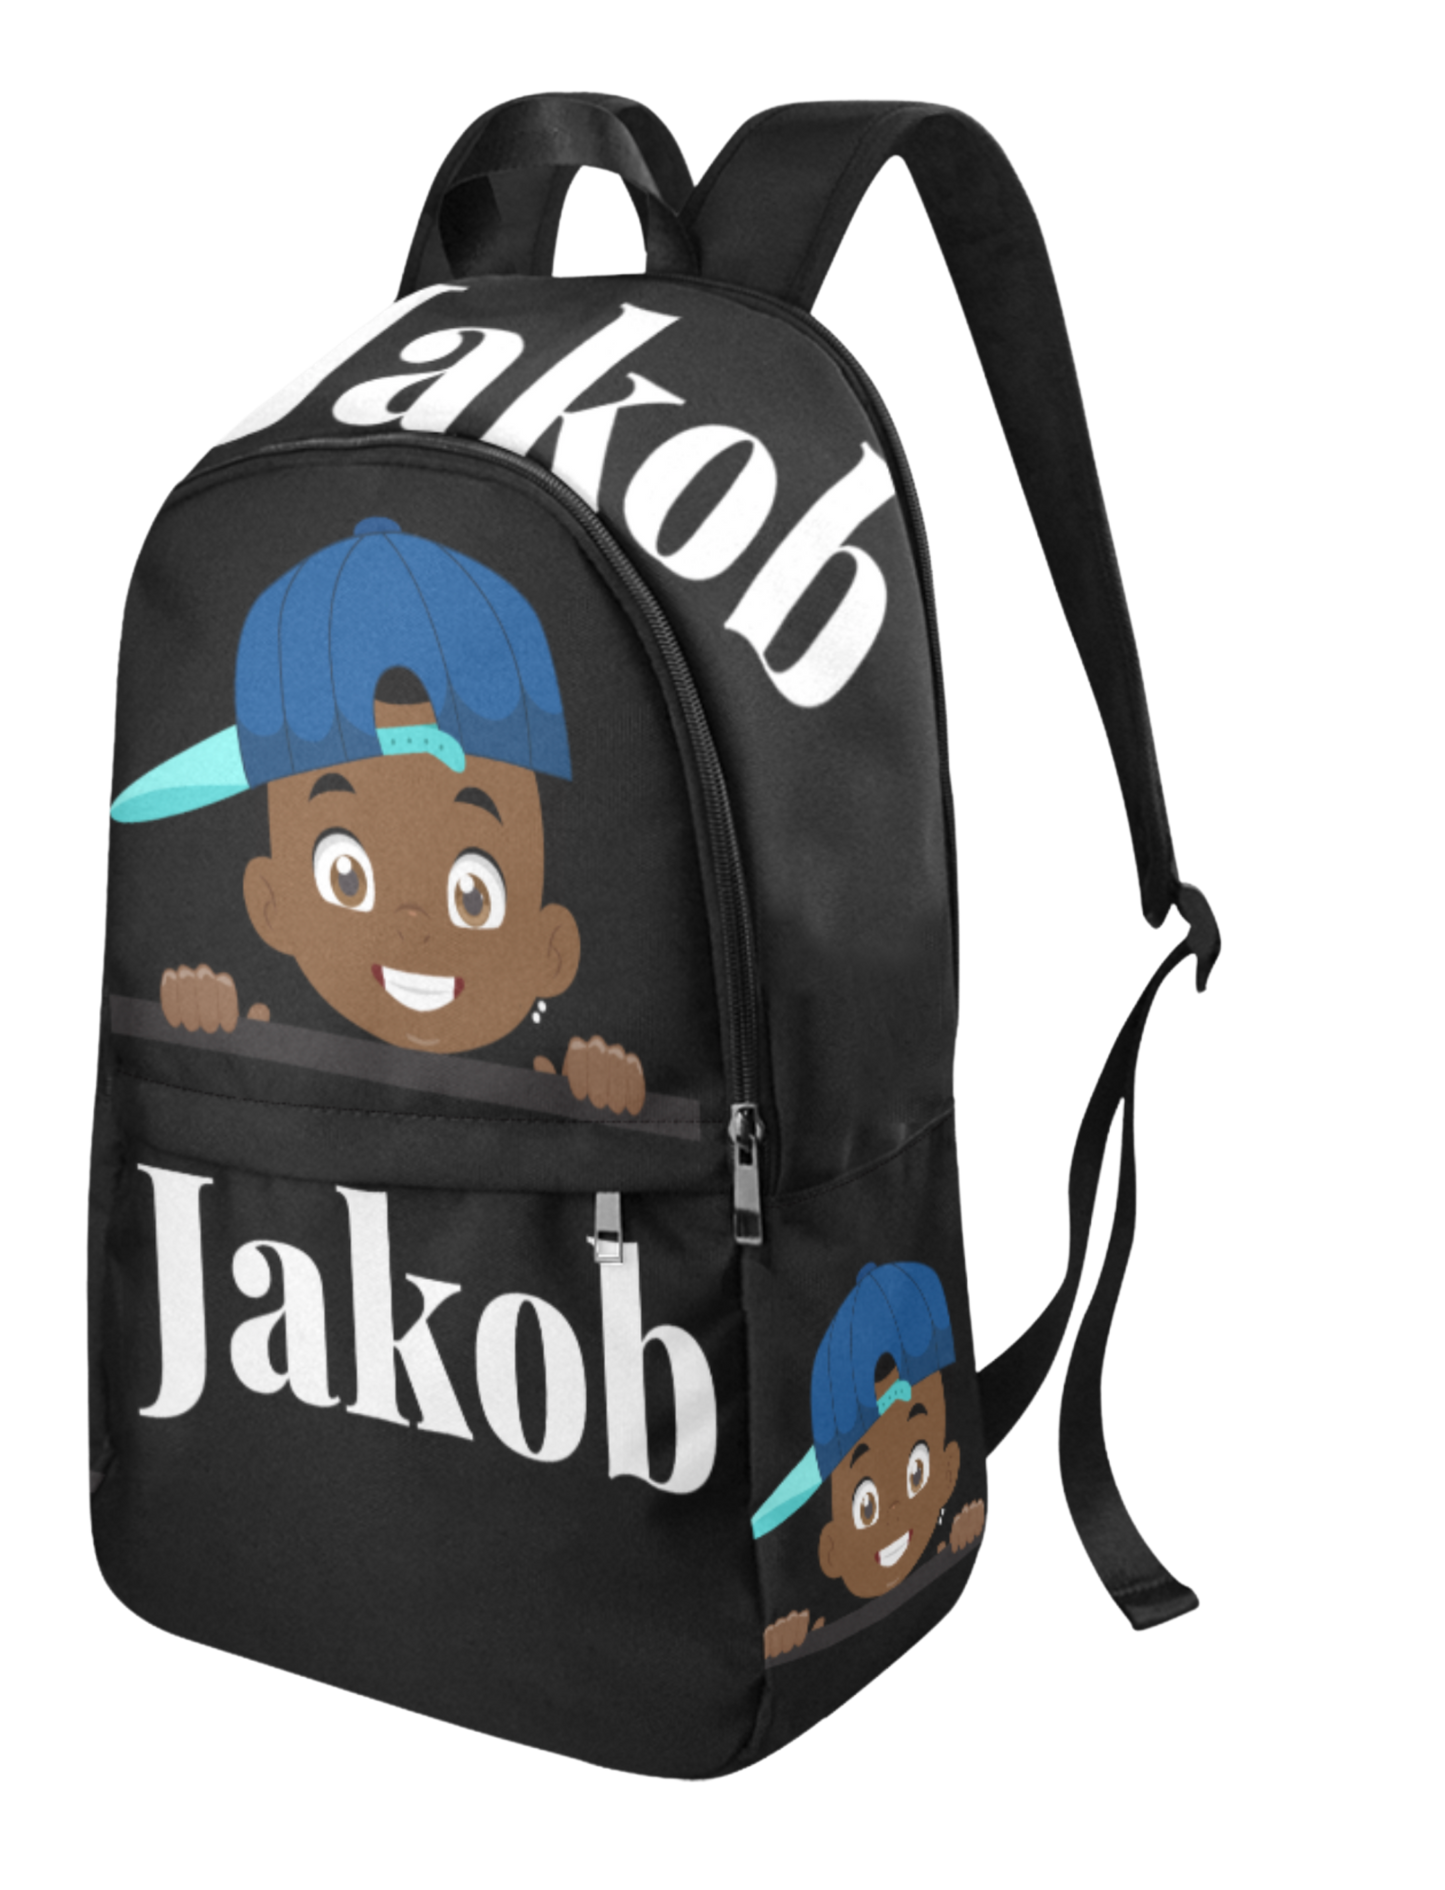 Ball Cap Custom School Backpack